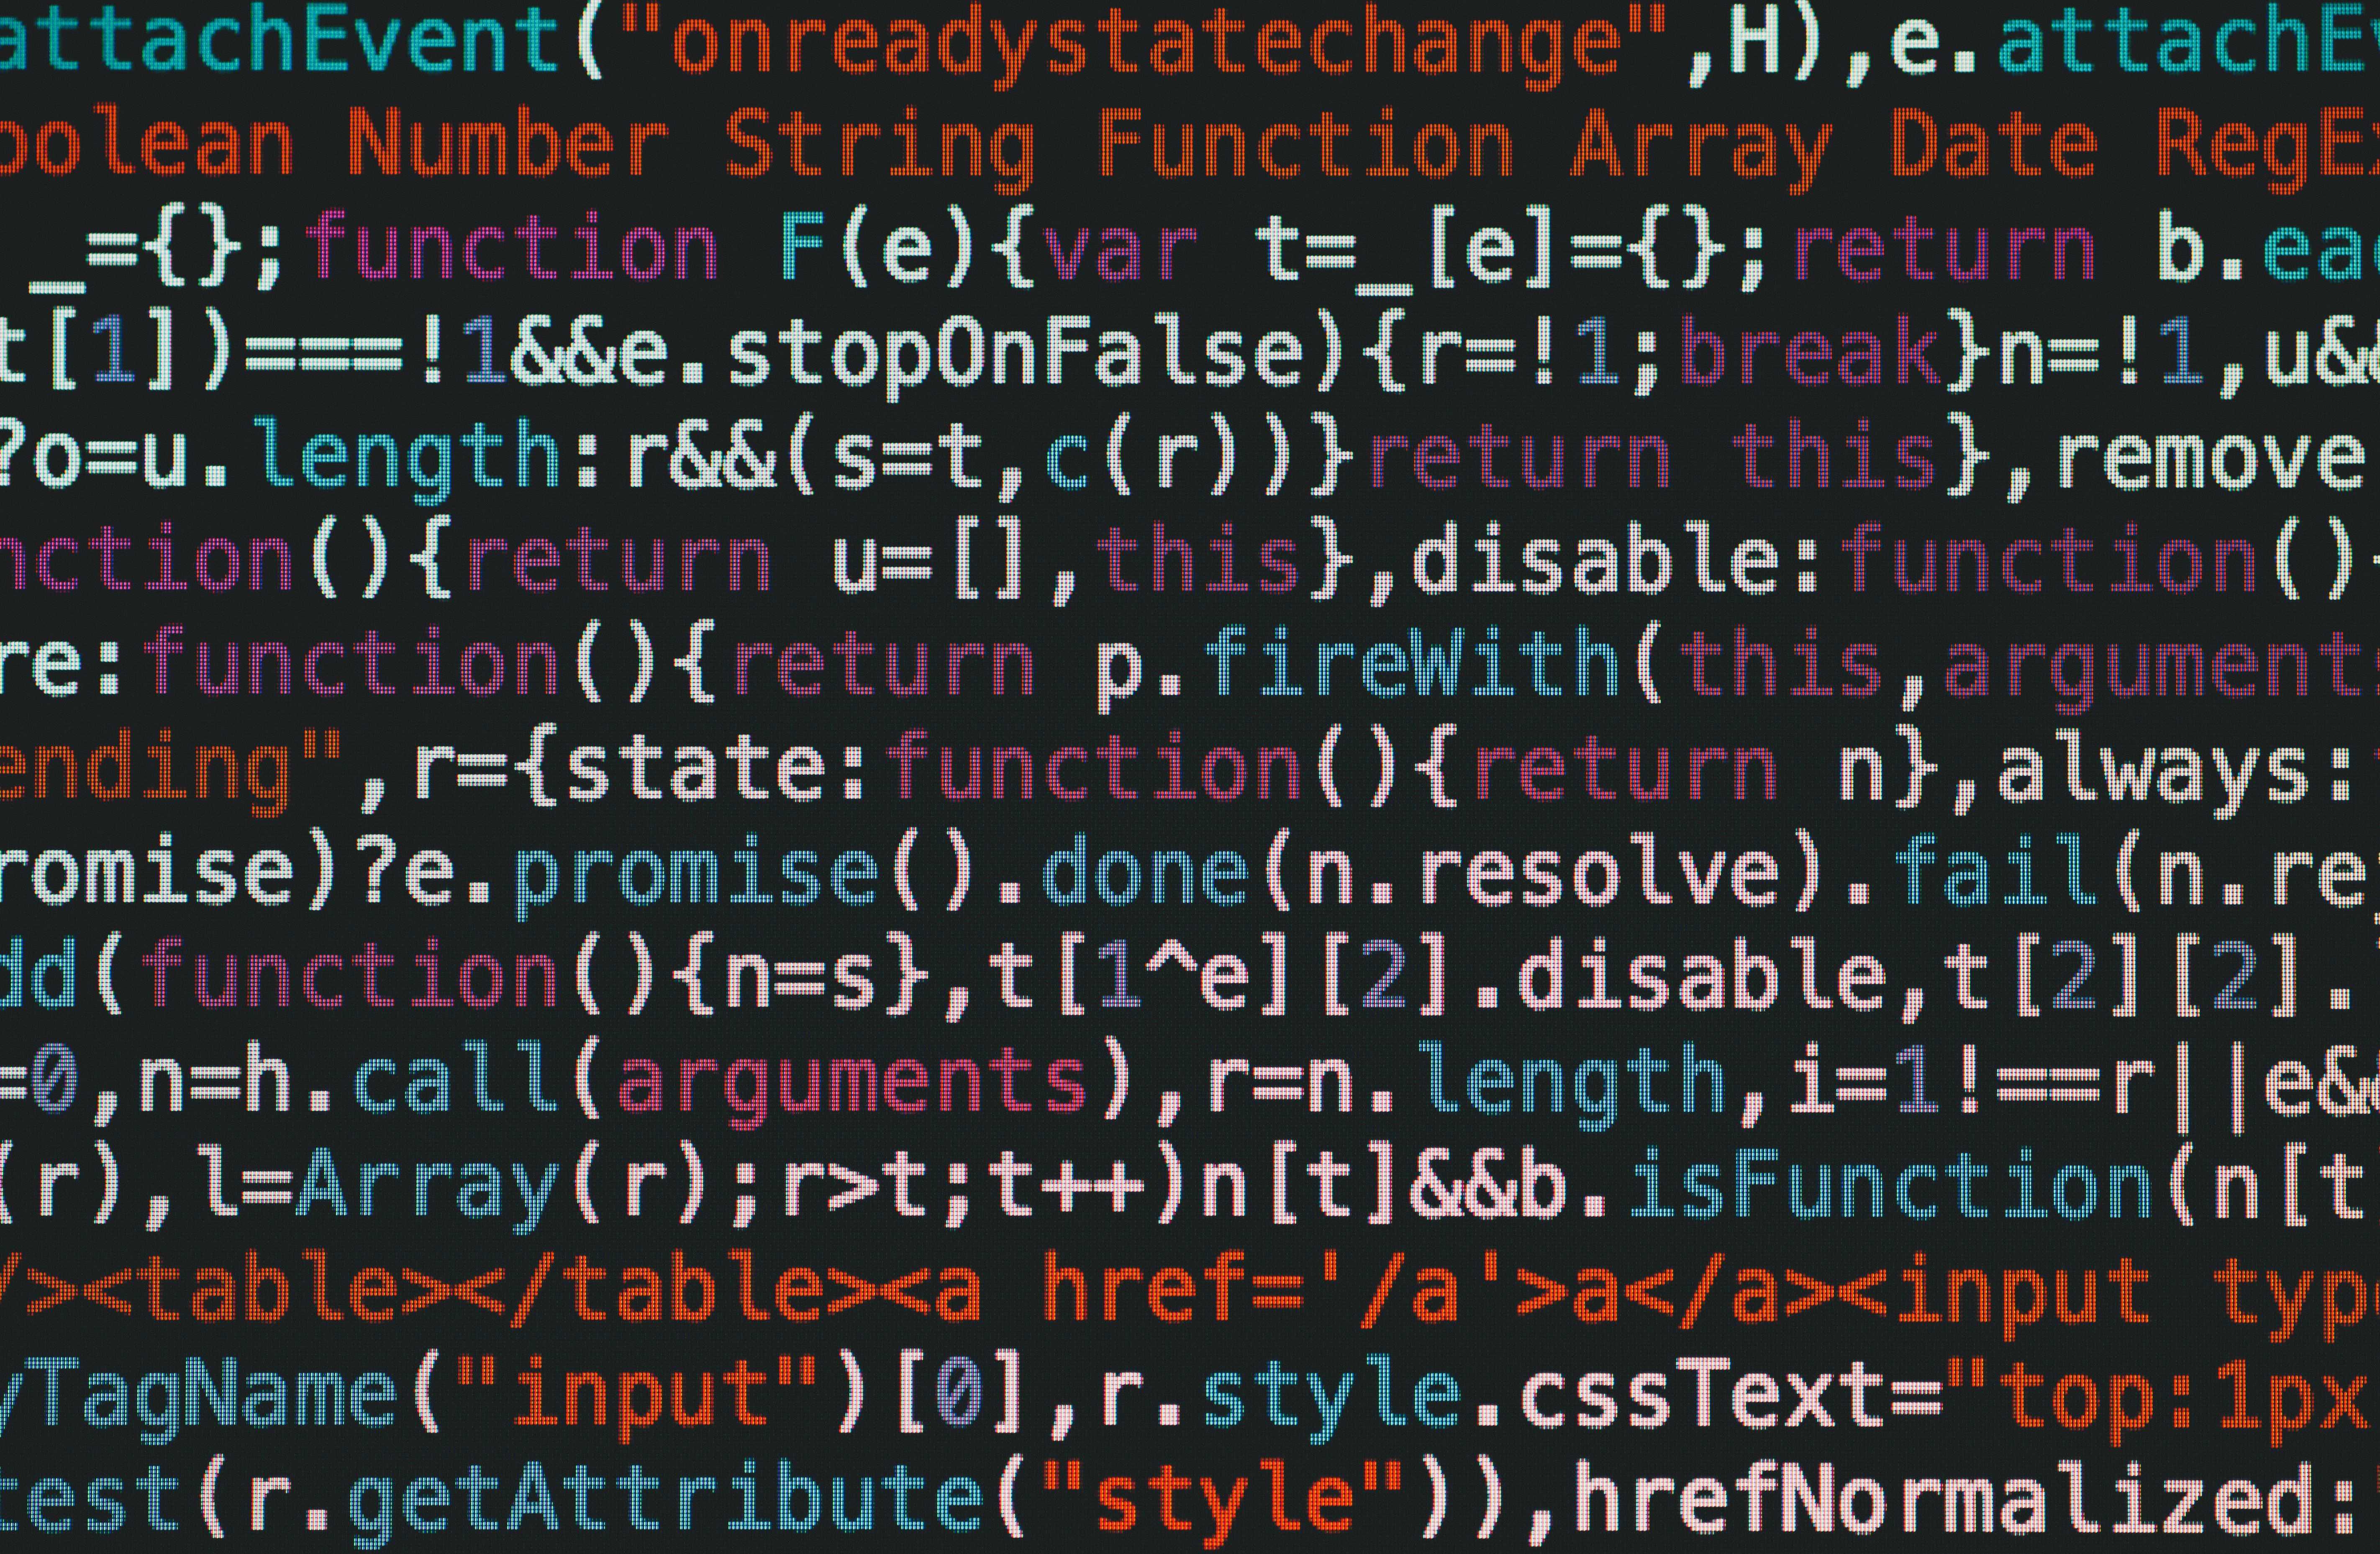 Code programming wallpaper smartphone